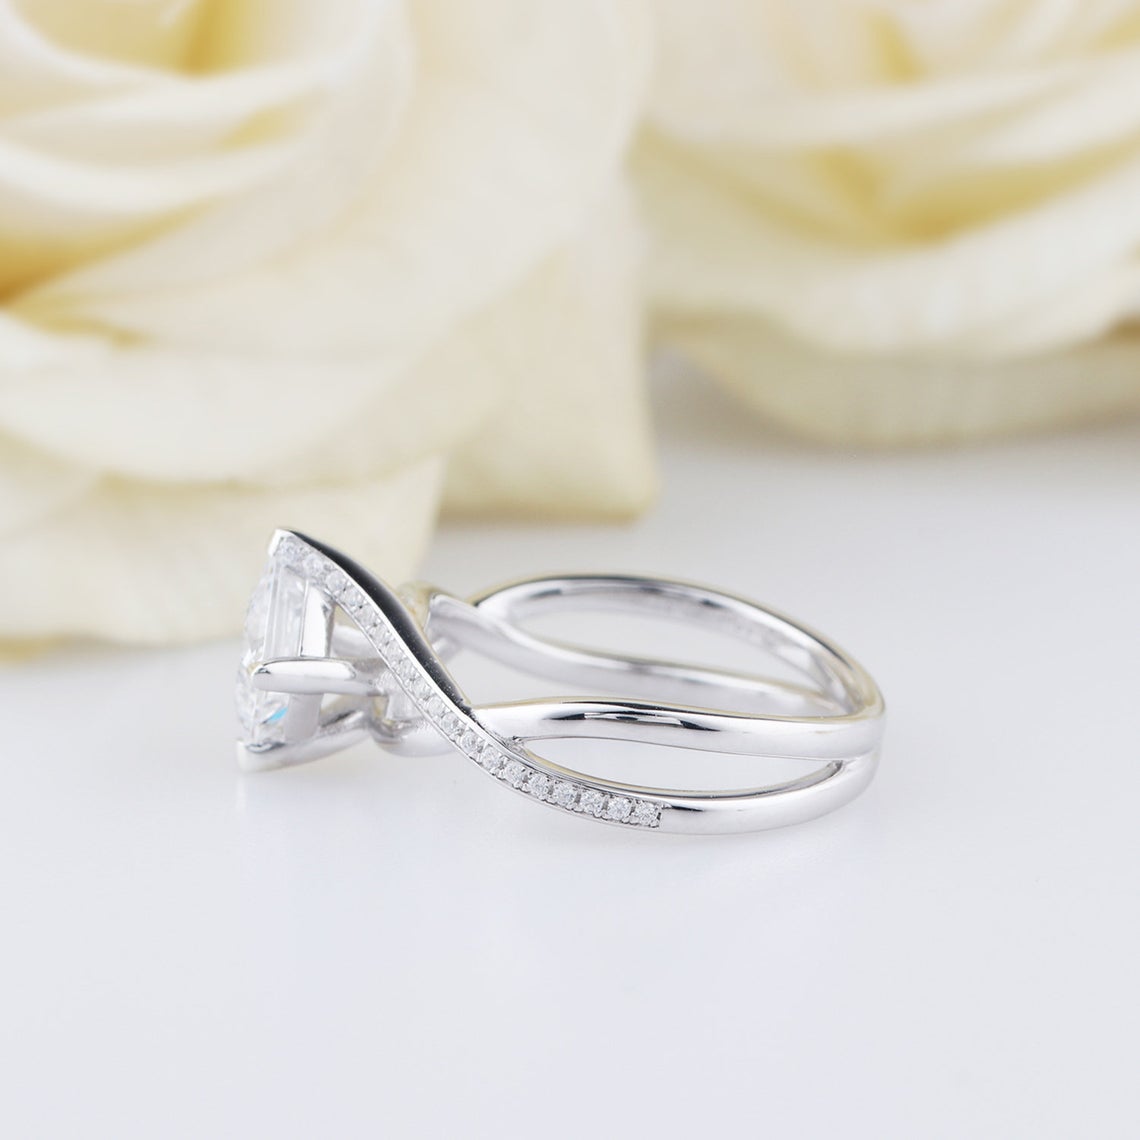 1 carat princess cut moissanite engagement ring